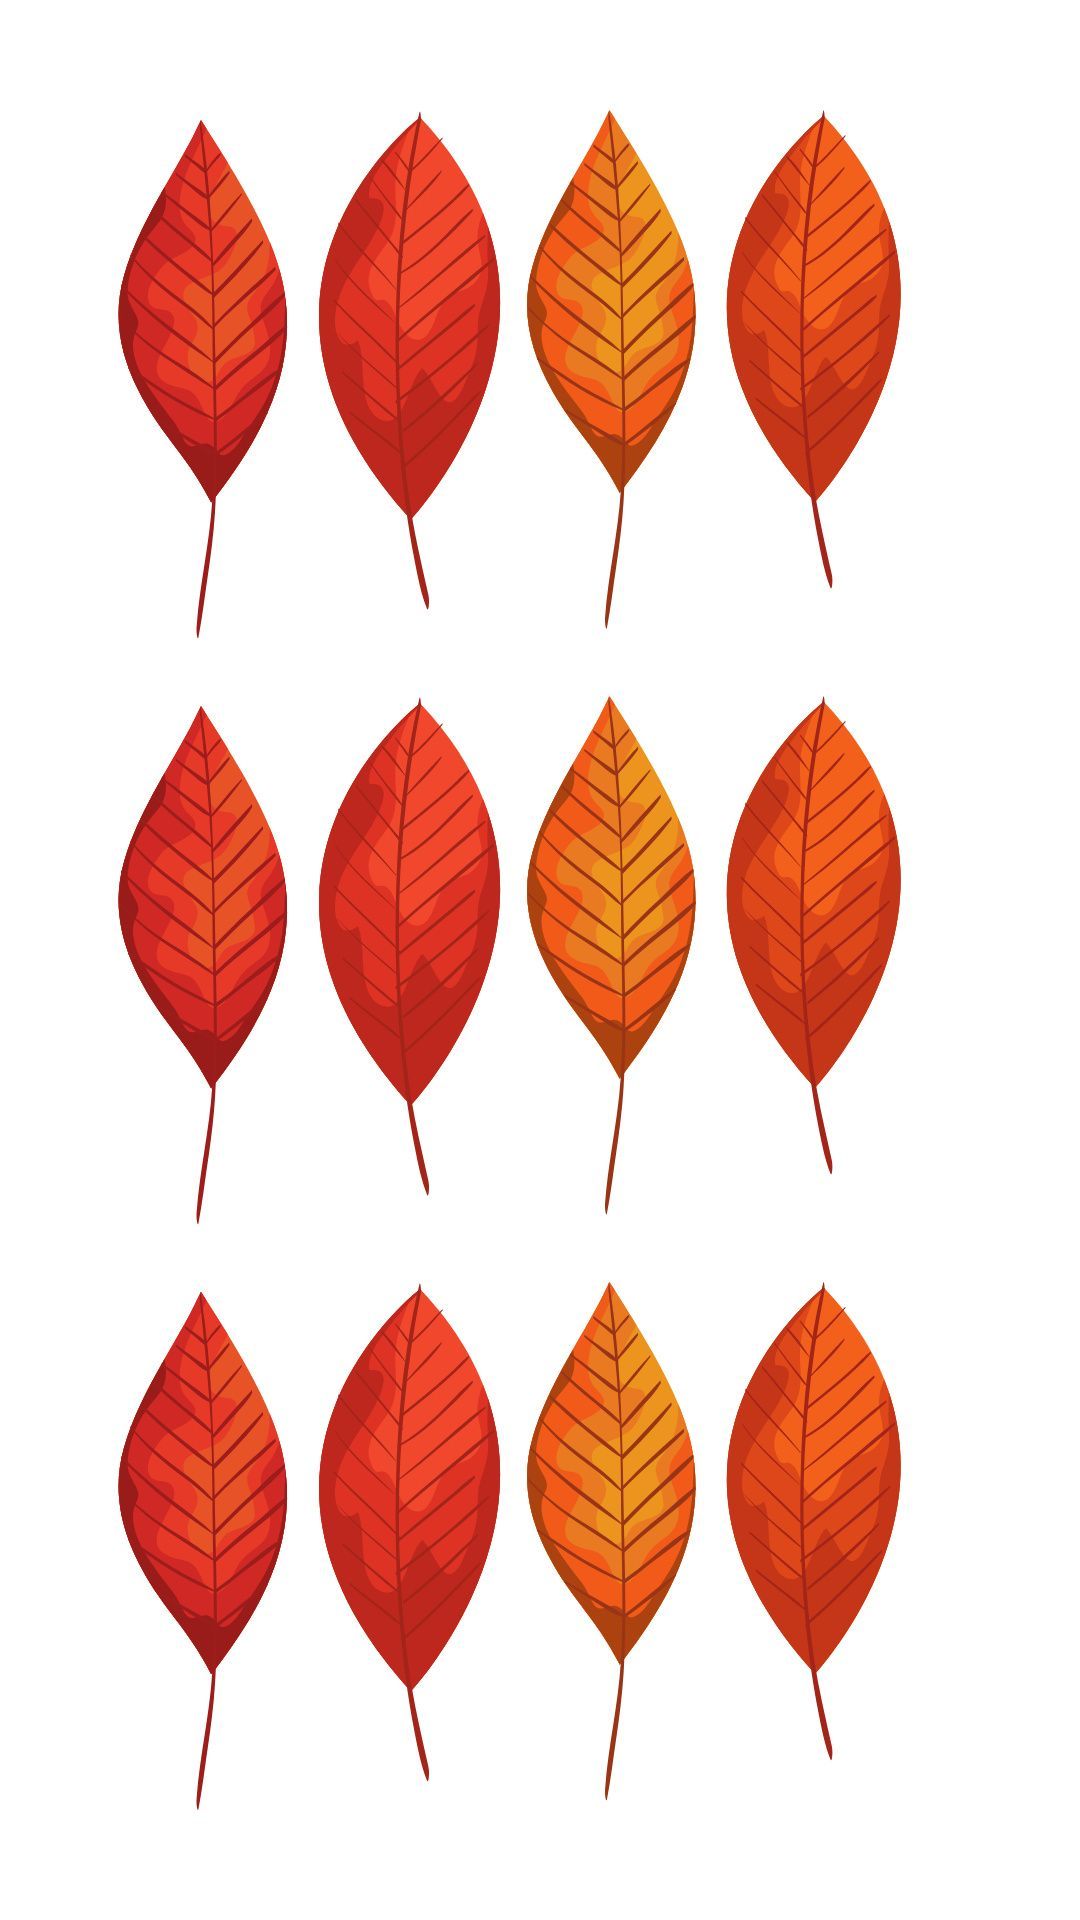 Beautiful Fall Wallpaper Download. Just Jes Lyn. iPhone wallpaper fall, Fall wallpaper, Free fall wallpaper